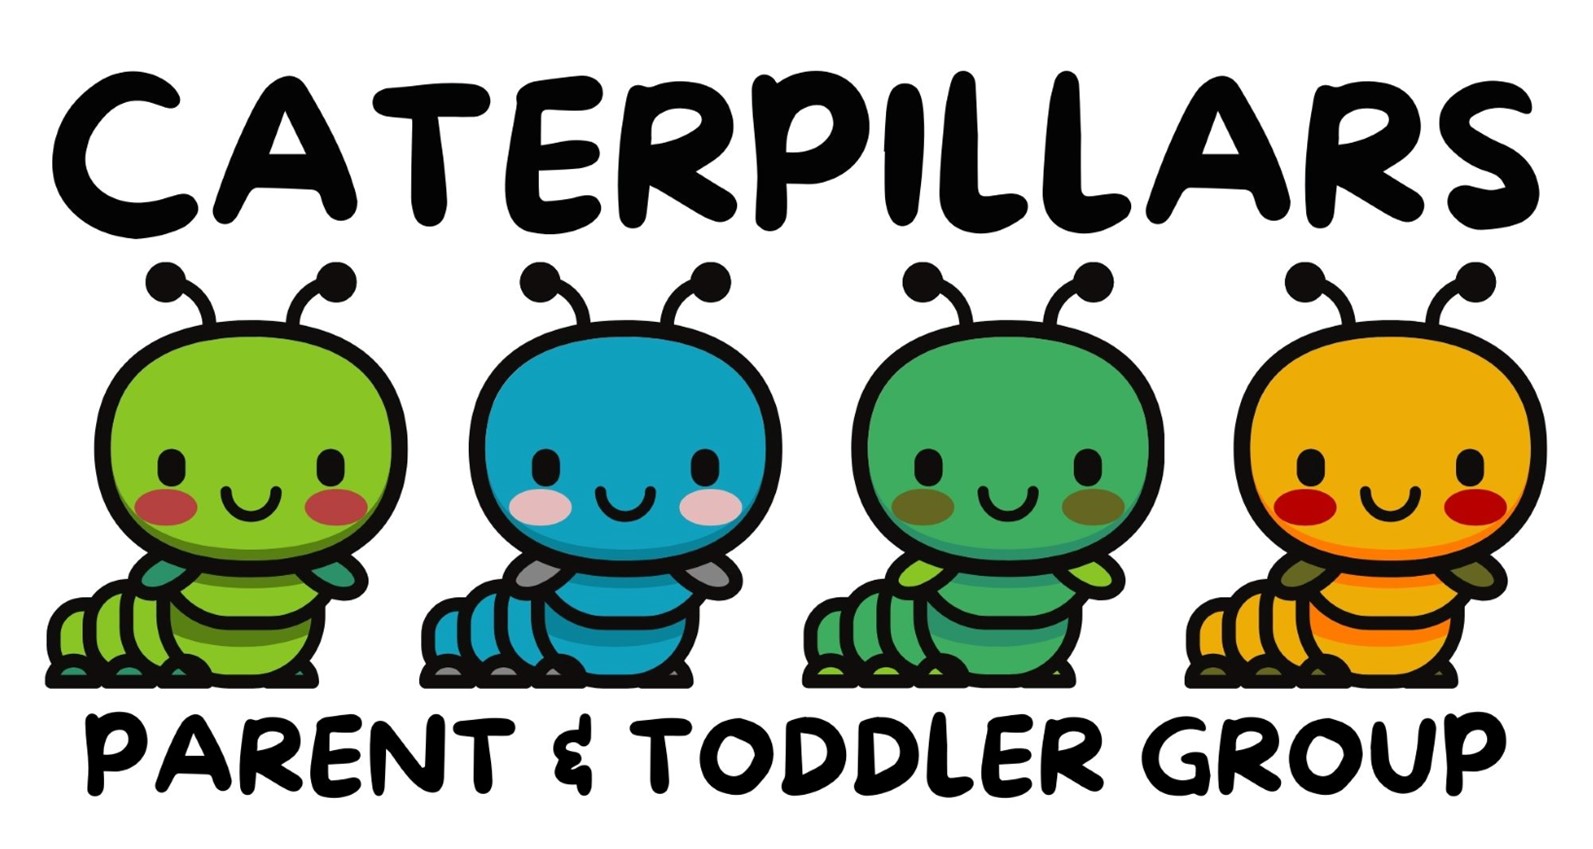 Caterpillars P&T group